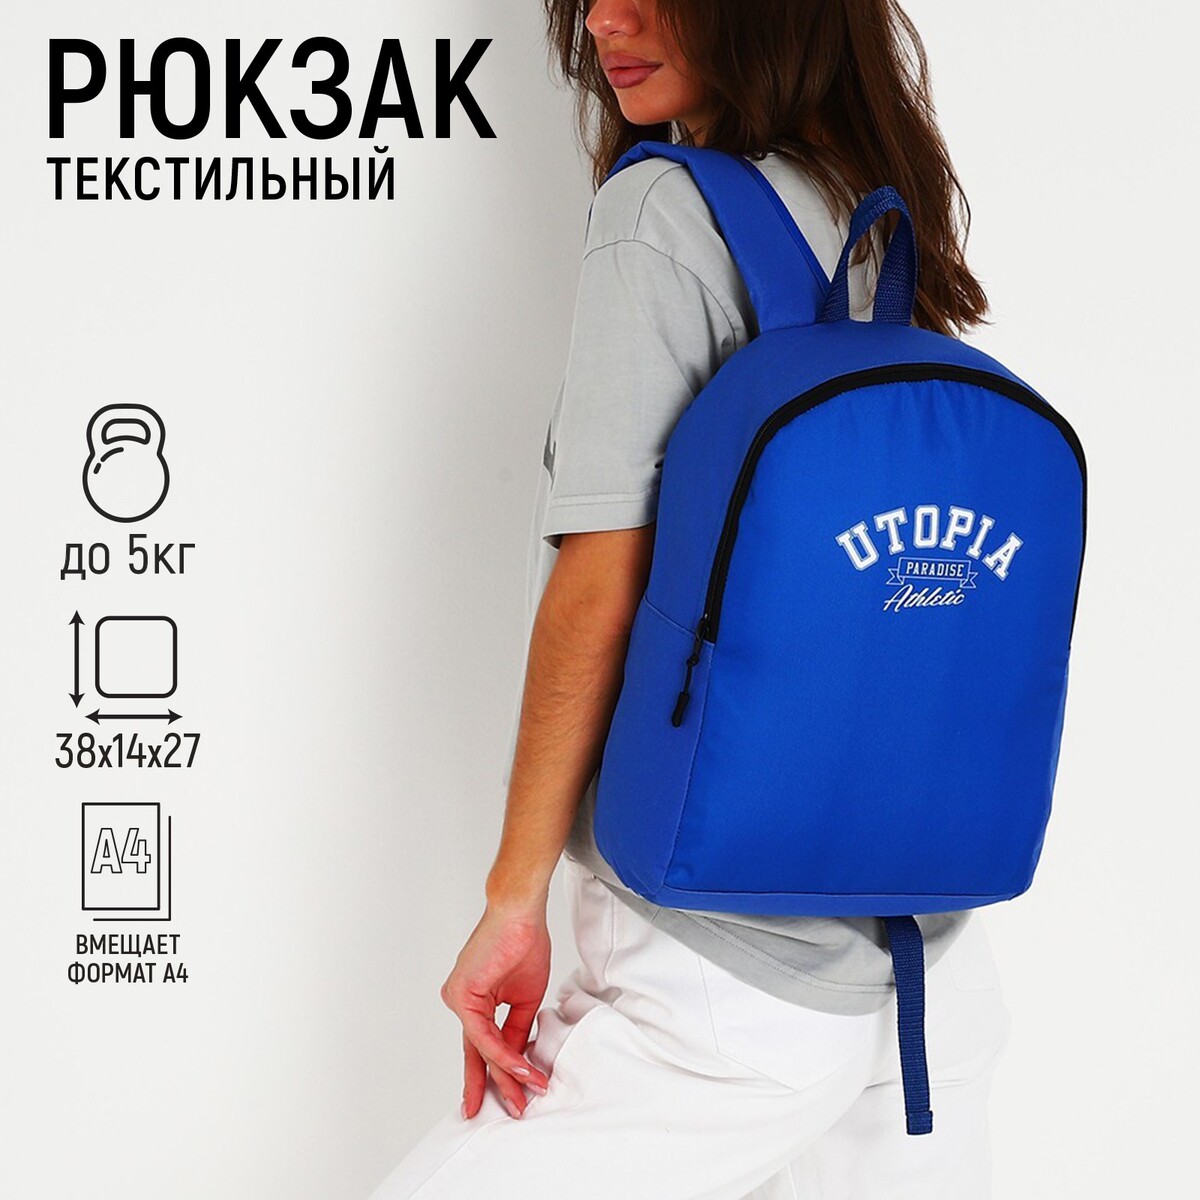 Рюкзак текстильный utopia, 38х14х27 см, цвет синий рюкзак текстильный кеды 38х14х27 см